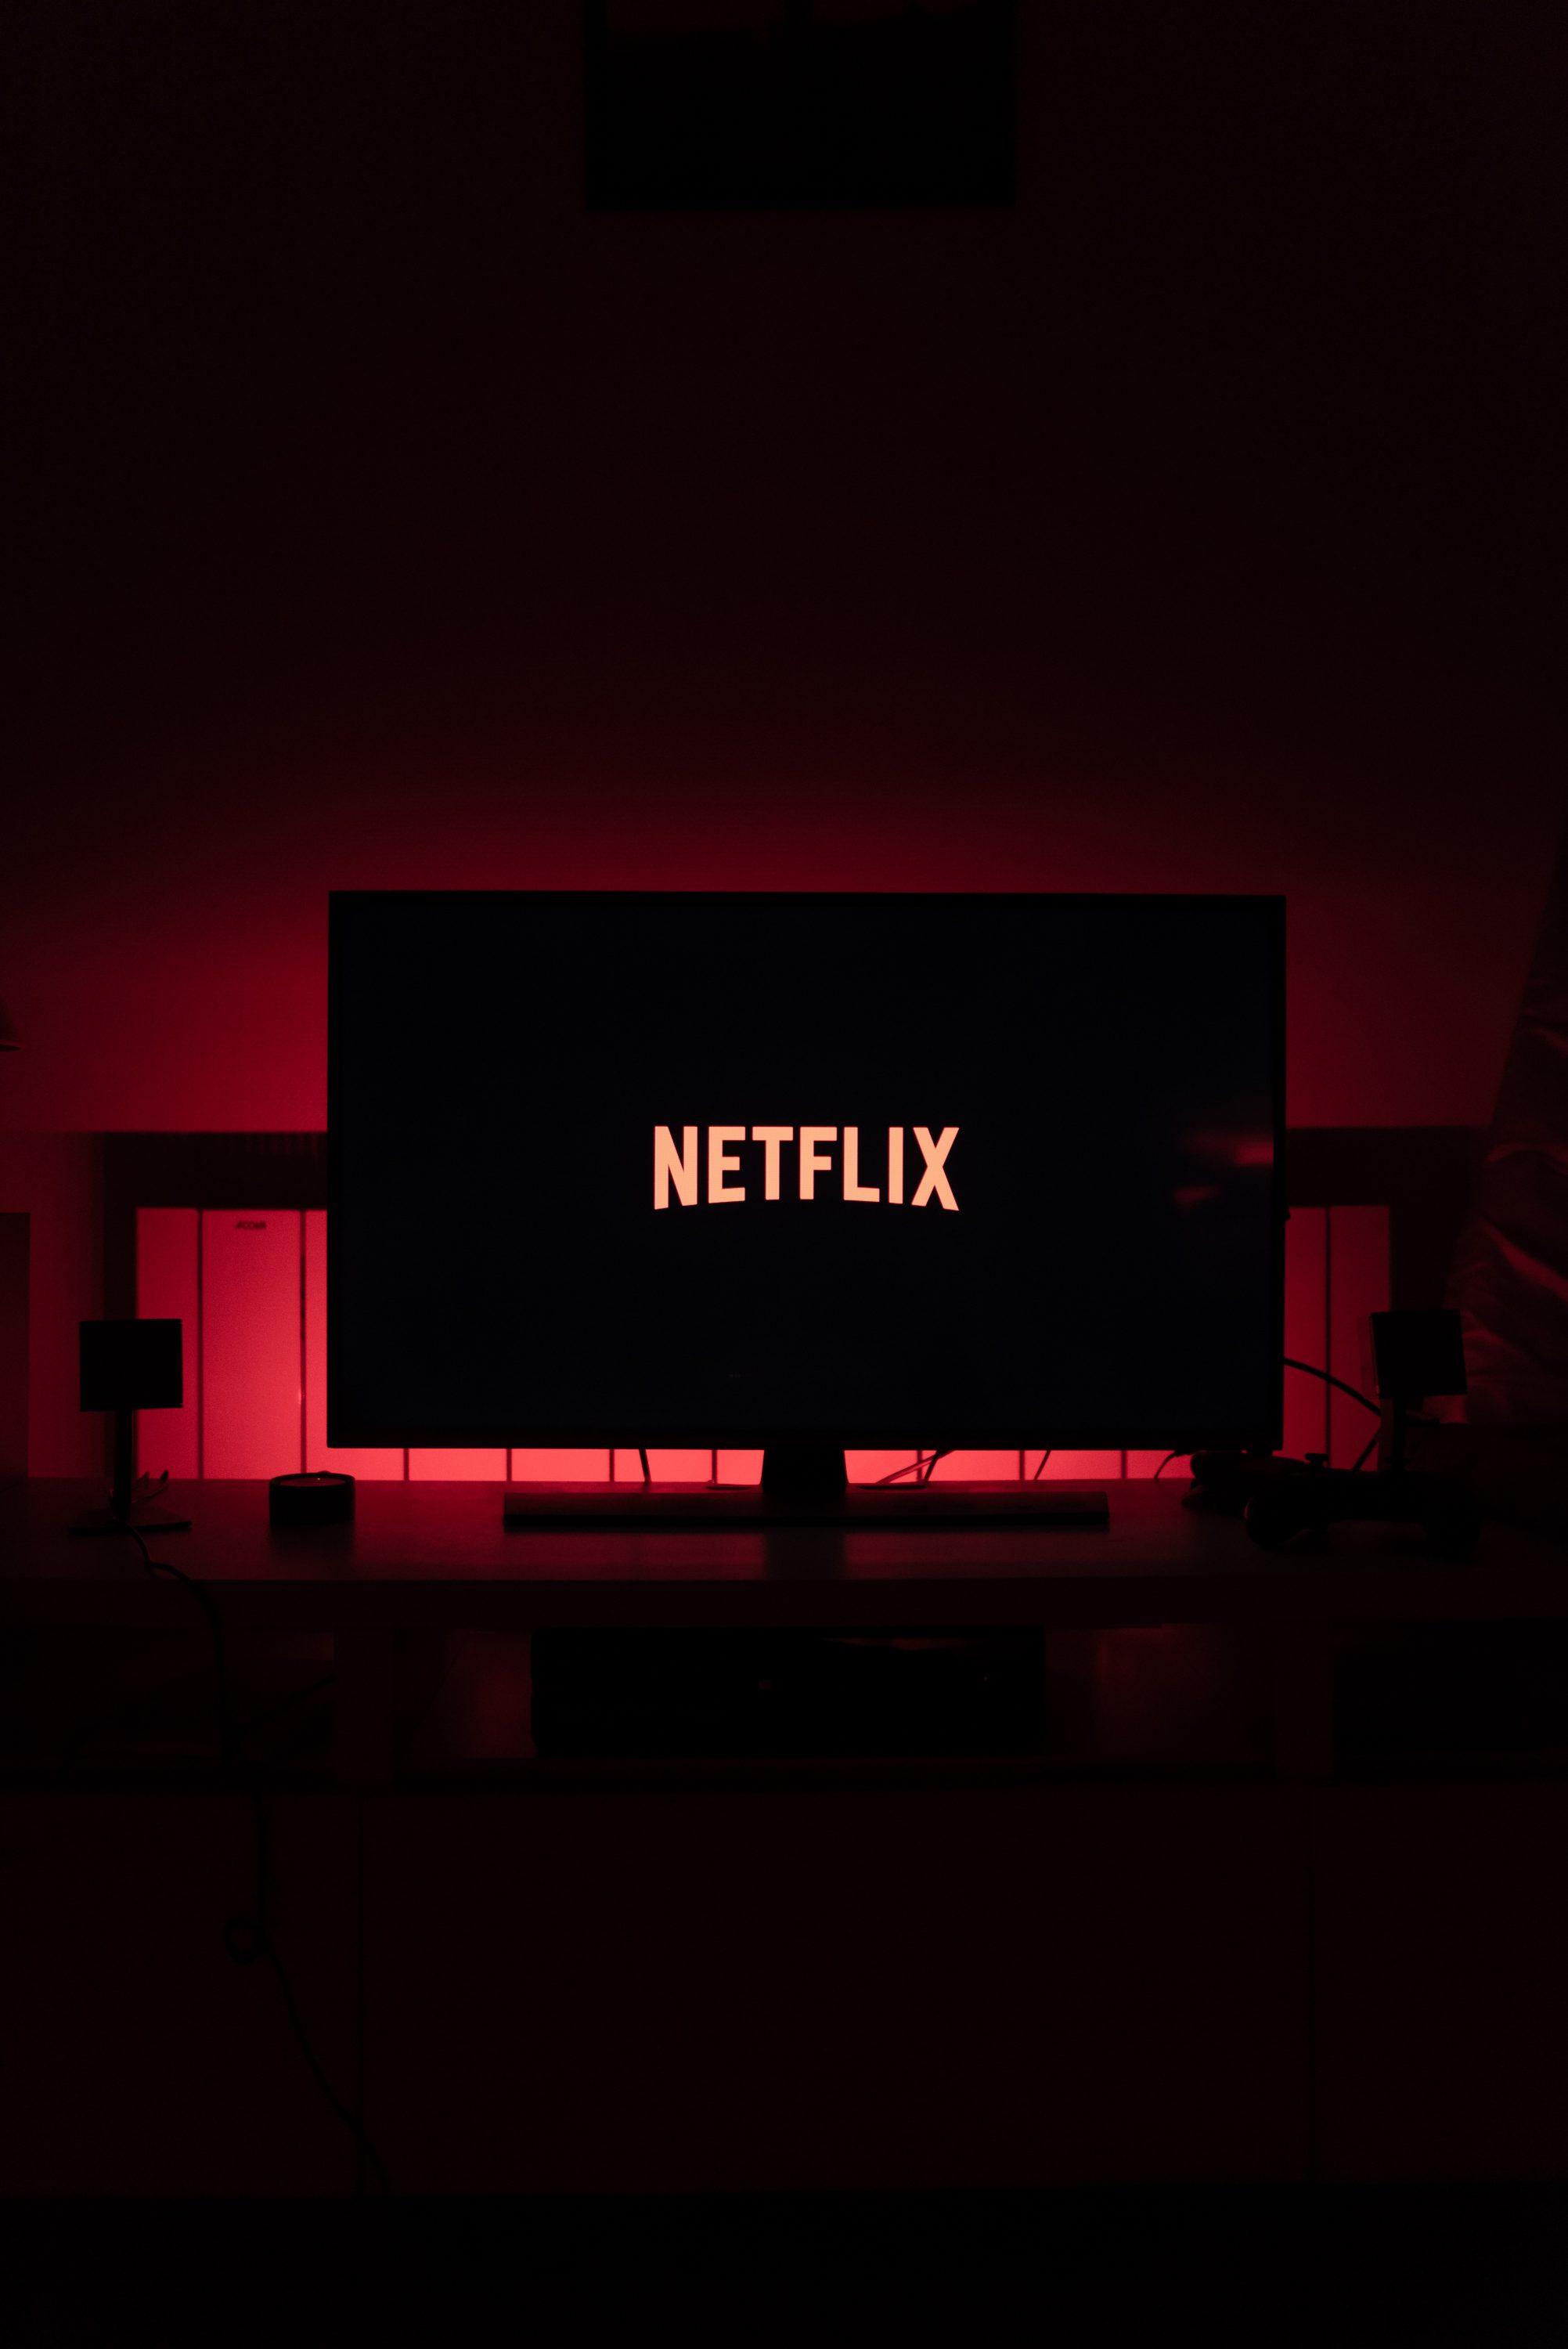 Nrtflixs Logo - Netflix Logo on TV Free Stock Photo | Stock Photo Bucket